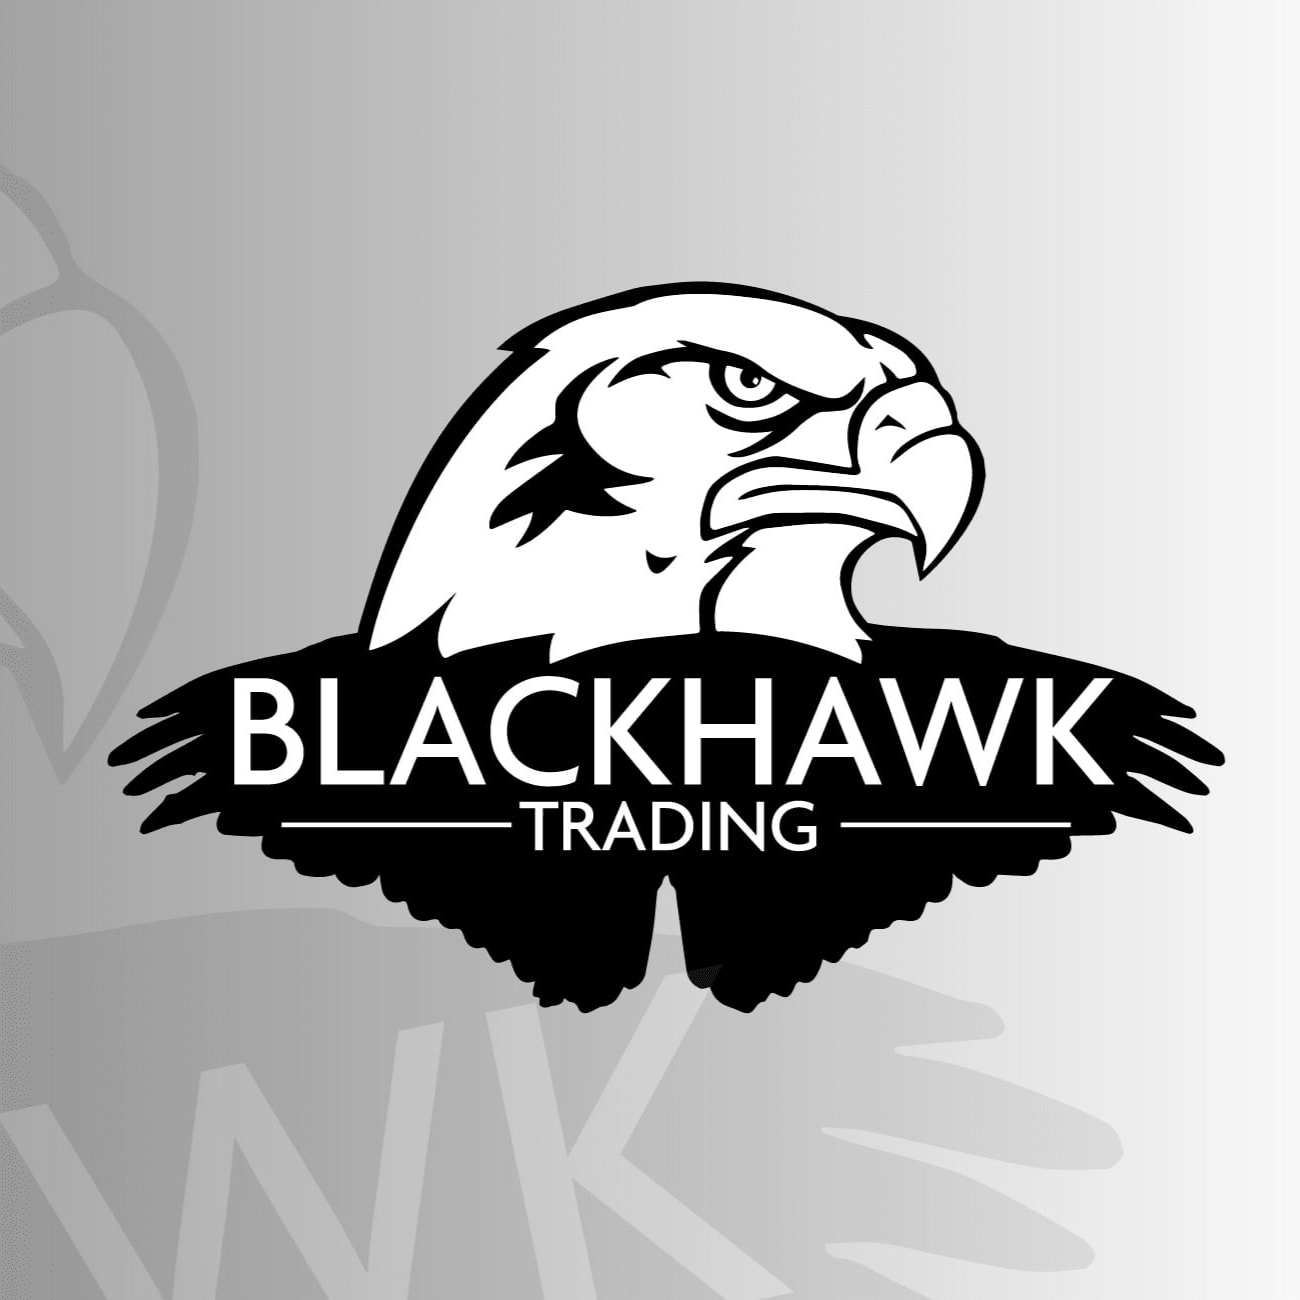 Blackhawk Trading